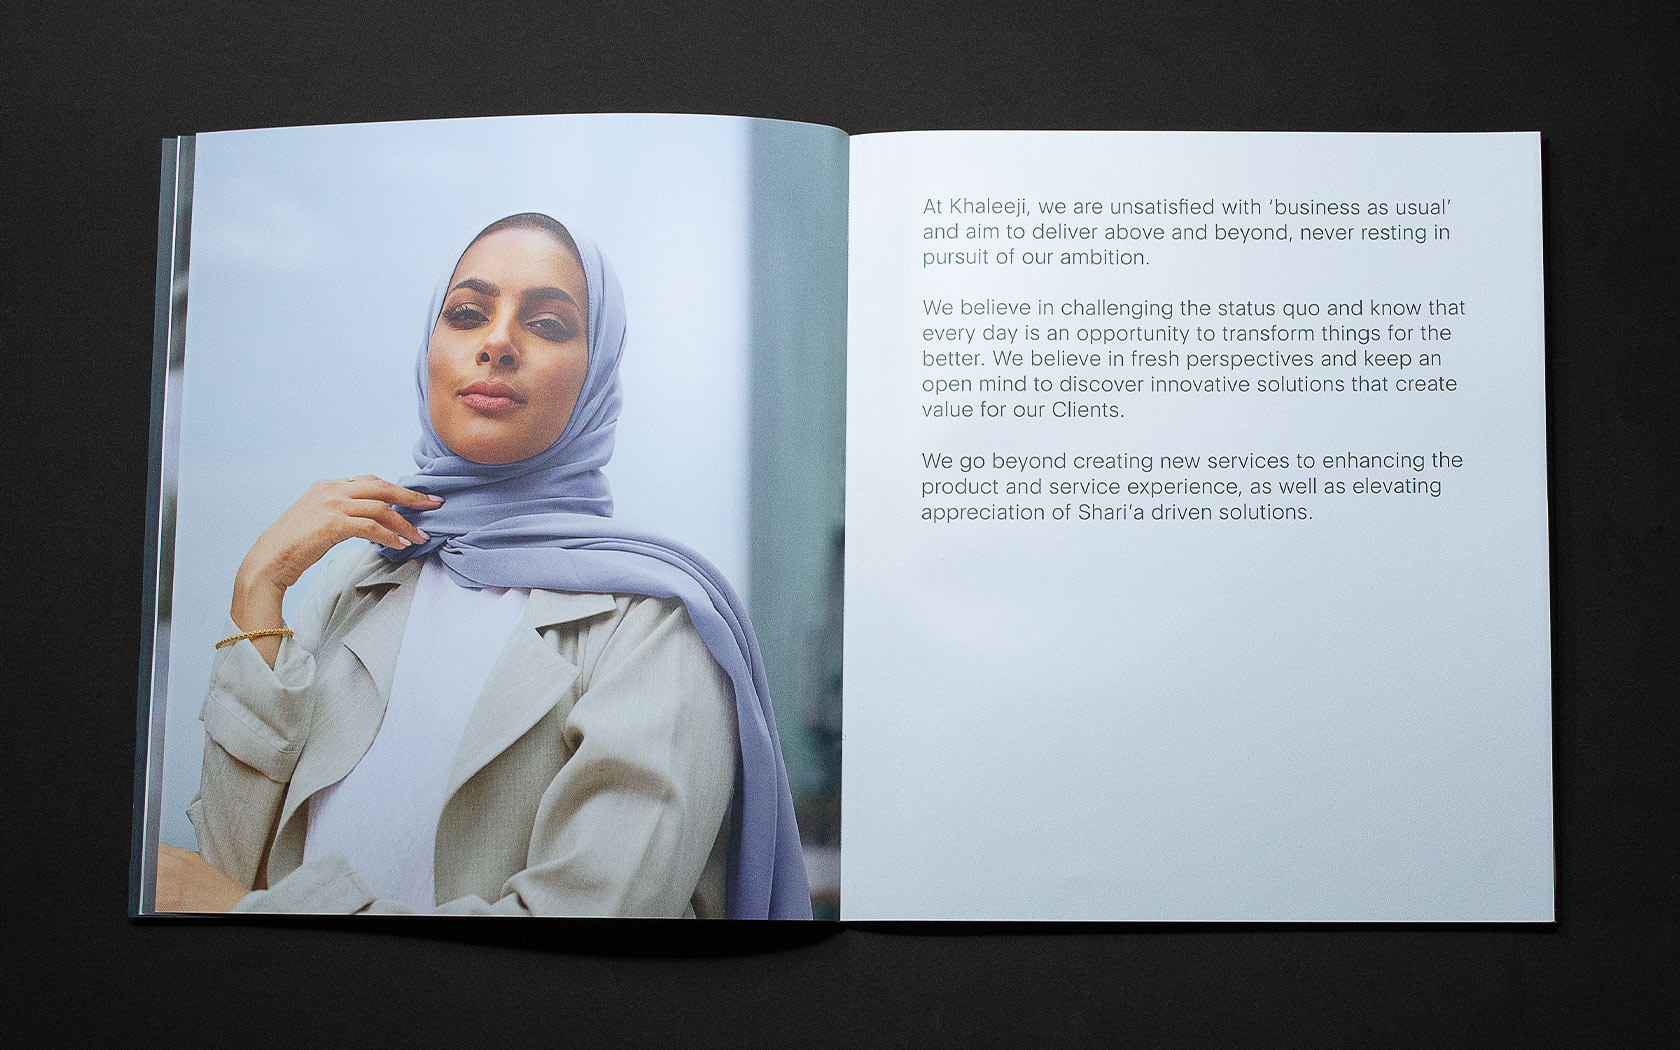 Khaleeji Brand Book. Lady image spread and text